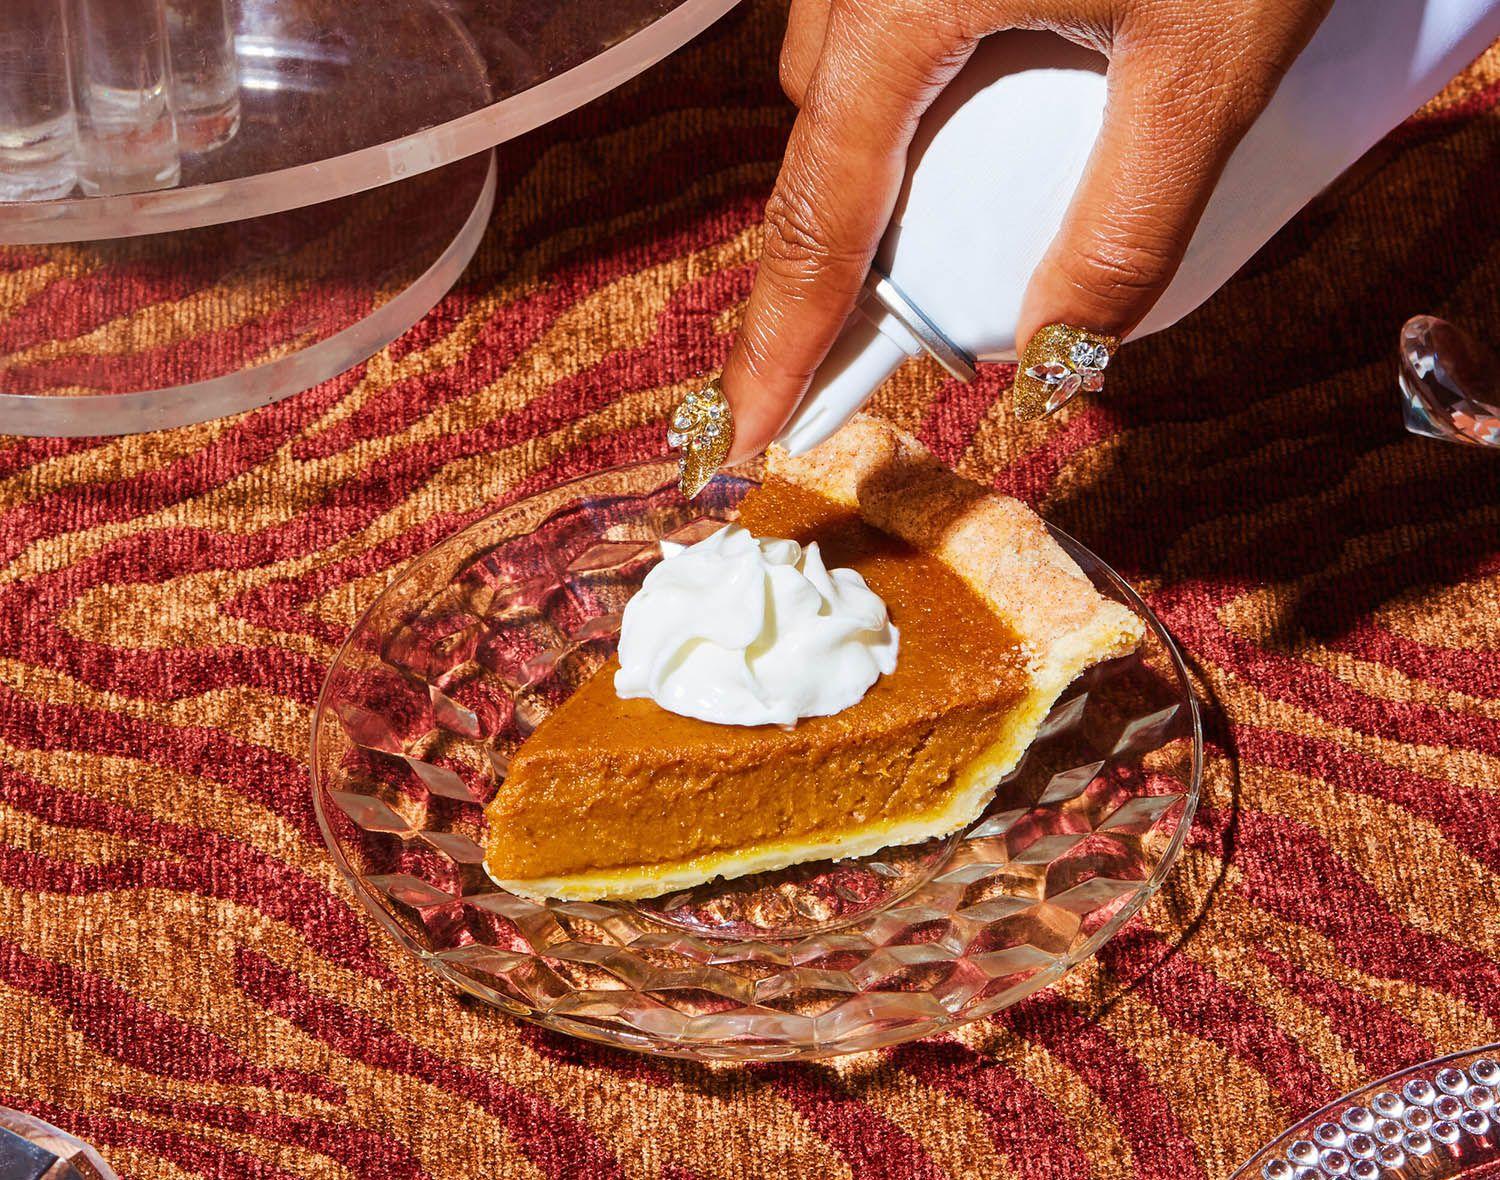 25 Glorious Photos of Pie for Pi